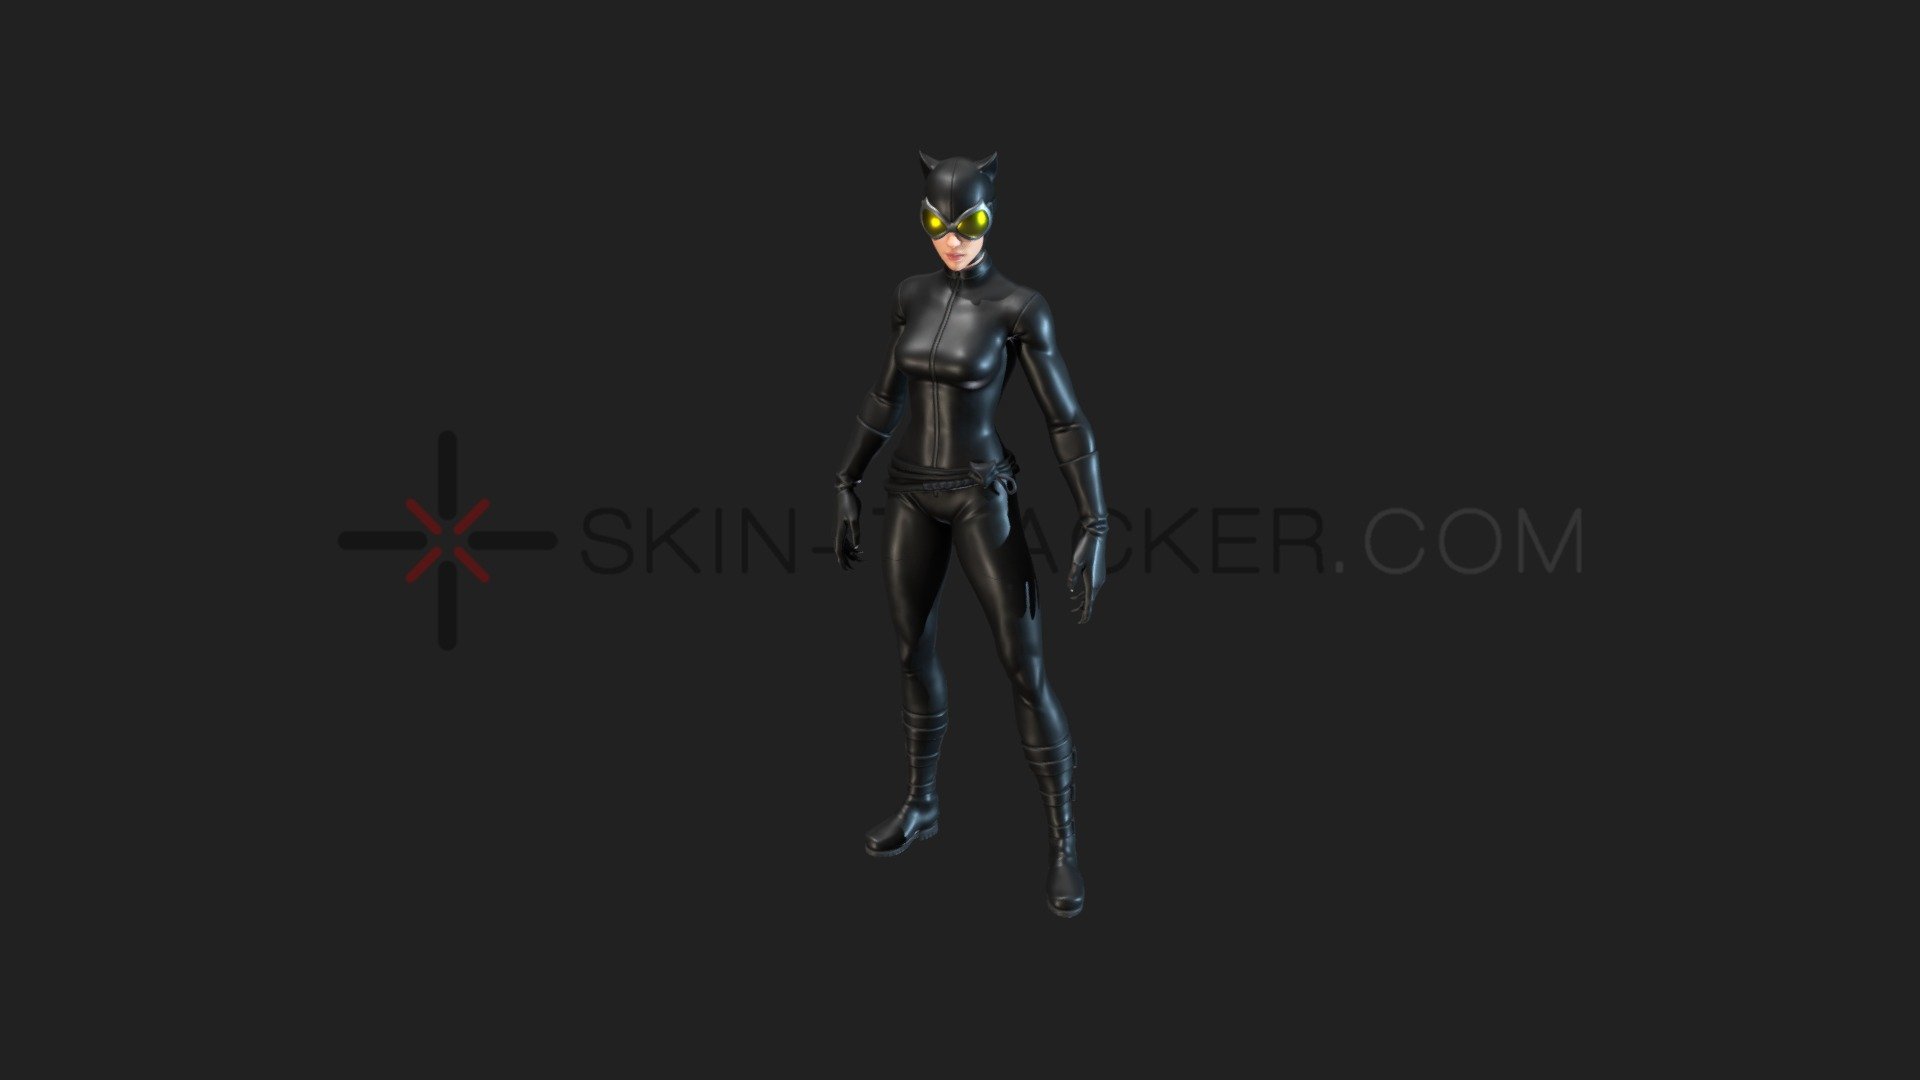 Uploaded for Skin-Tracker.com - Fortnite - Catwonman Comic Book Outfit GD - 3D model by Skin-Tracker (@stairwave) 3d model